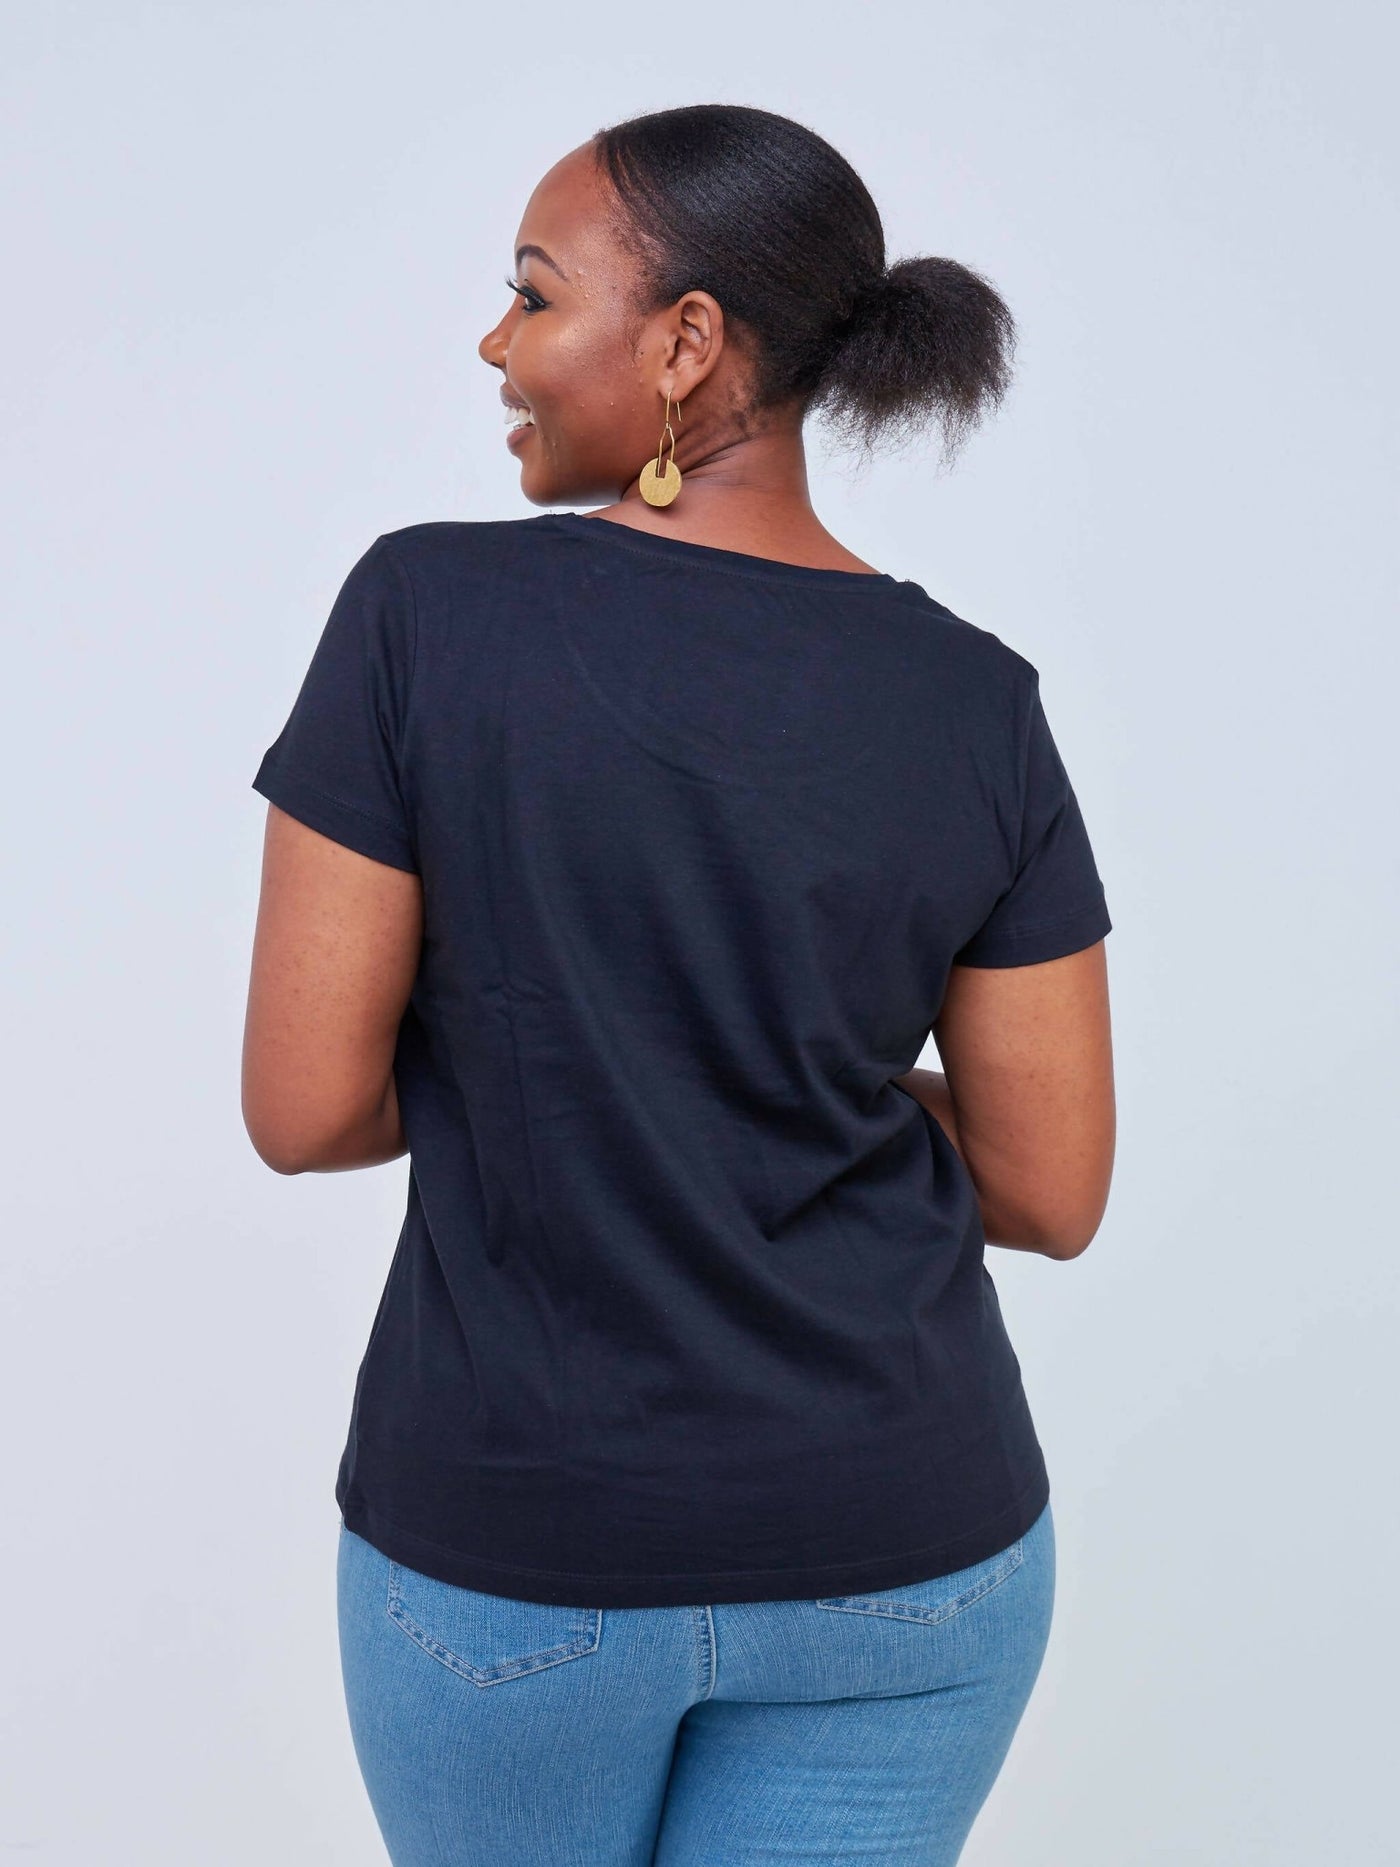 Lamazi Collections T-shirt - Black - Shop Zetu Kenya